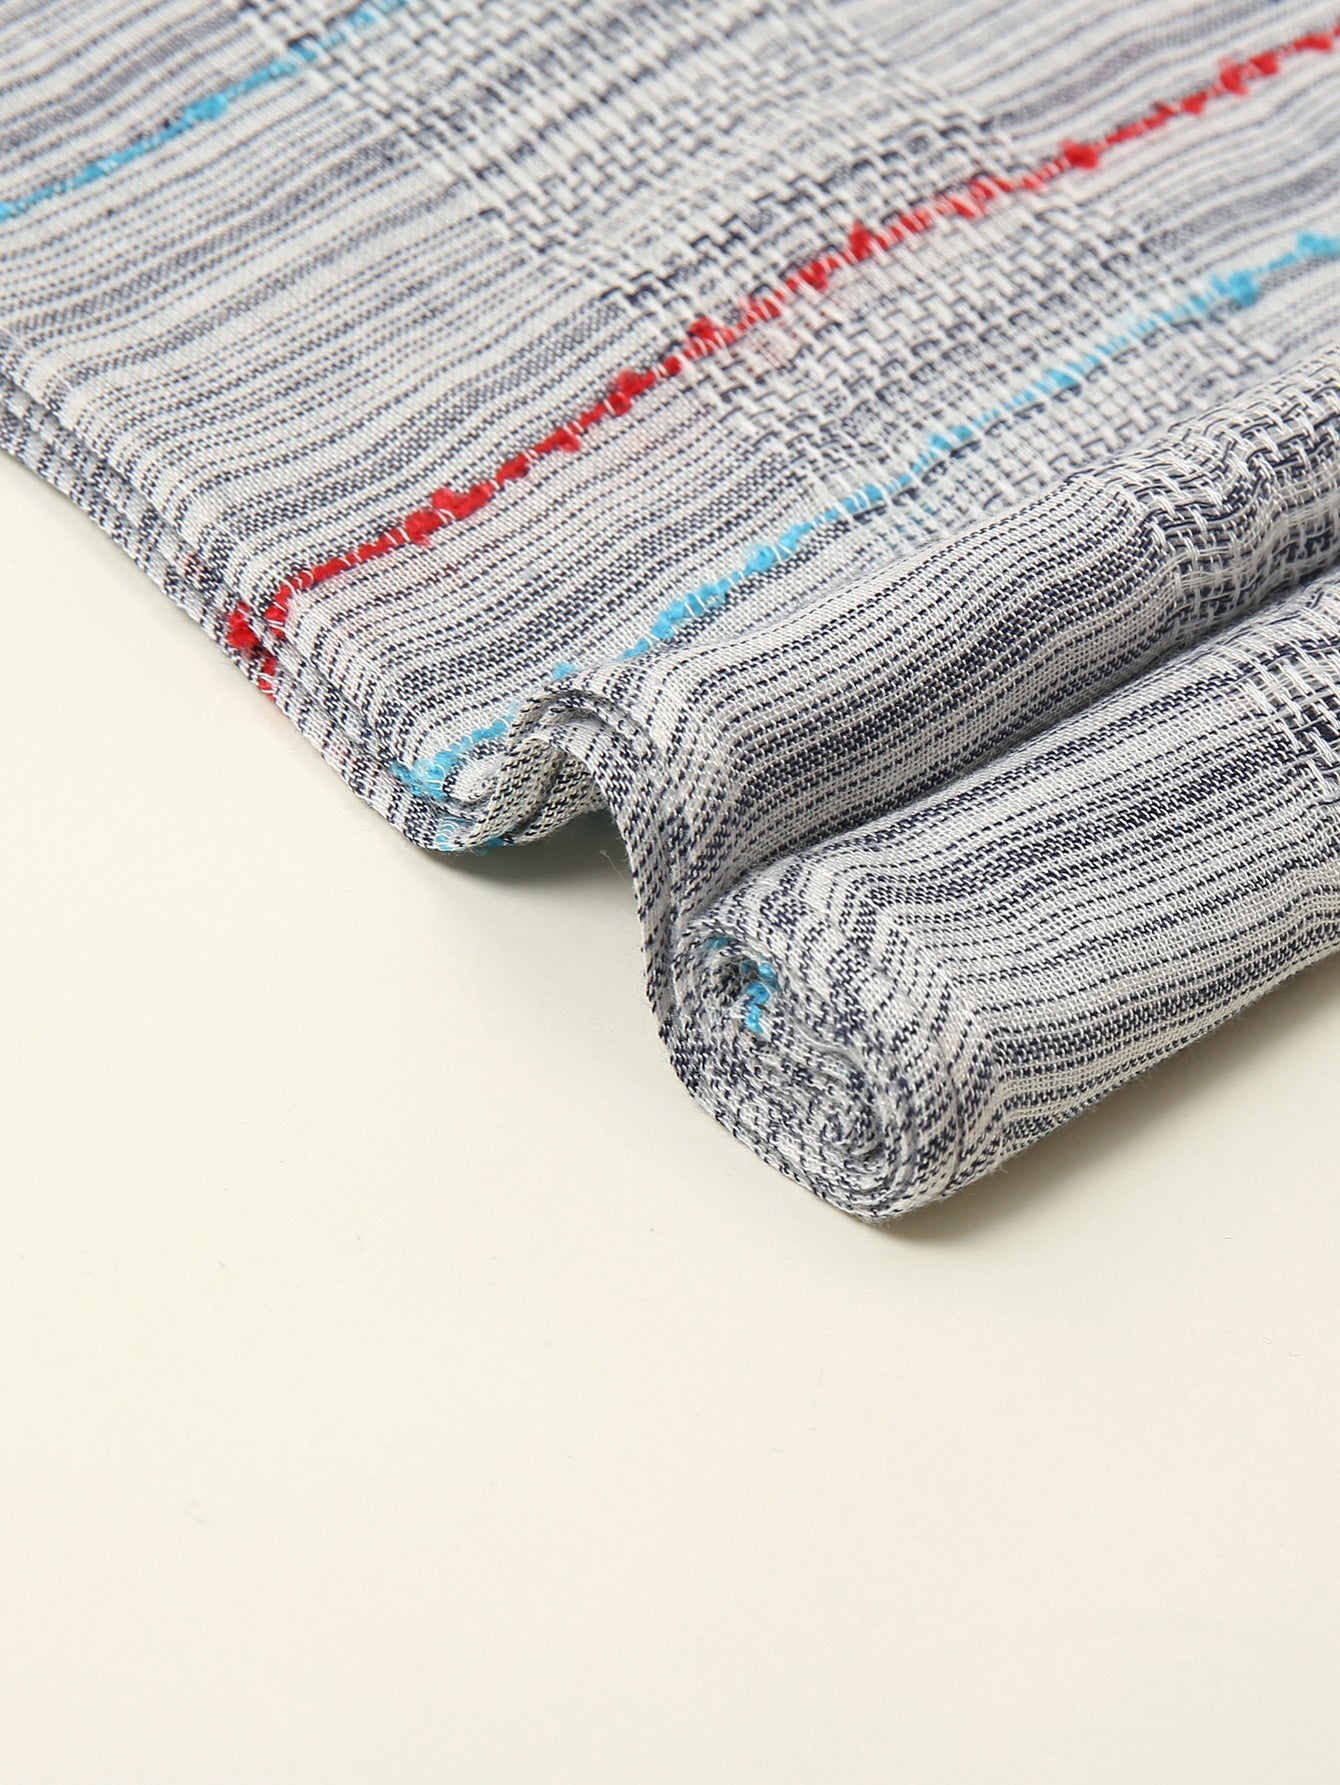 Striped color-blocked rayon scarf Sai Feel